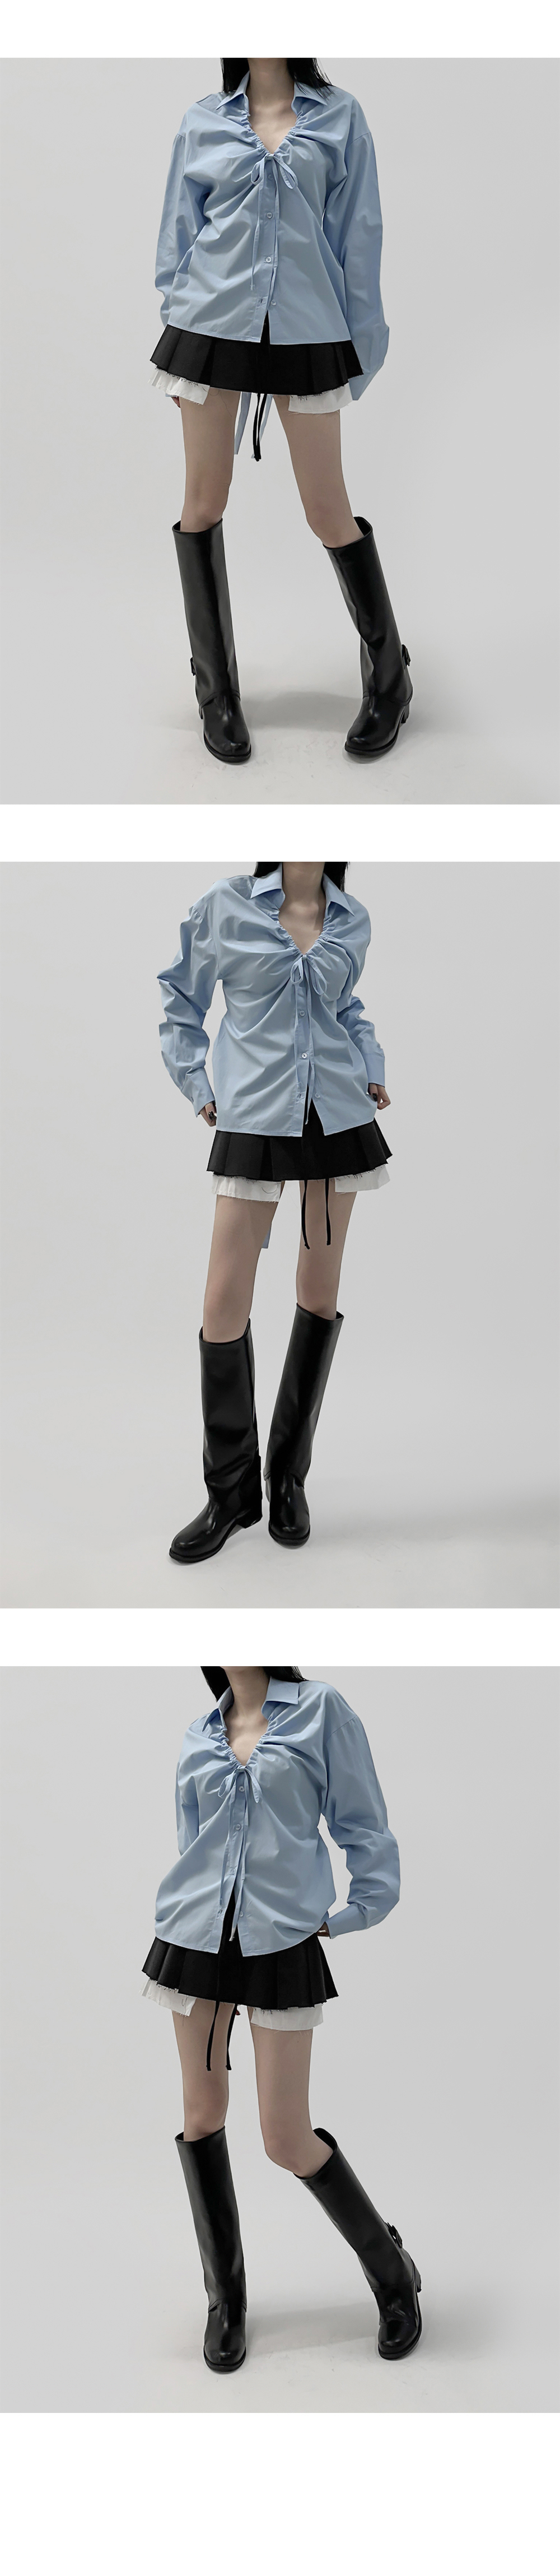 shorts model image-S1L5